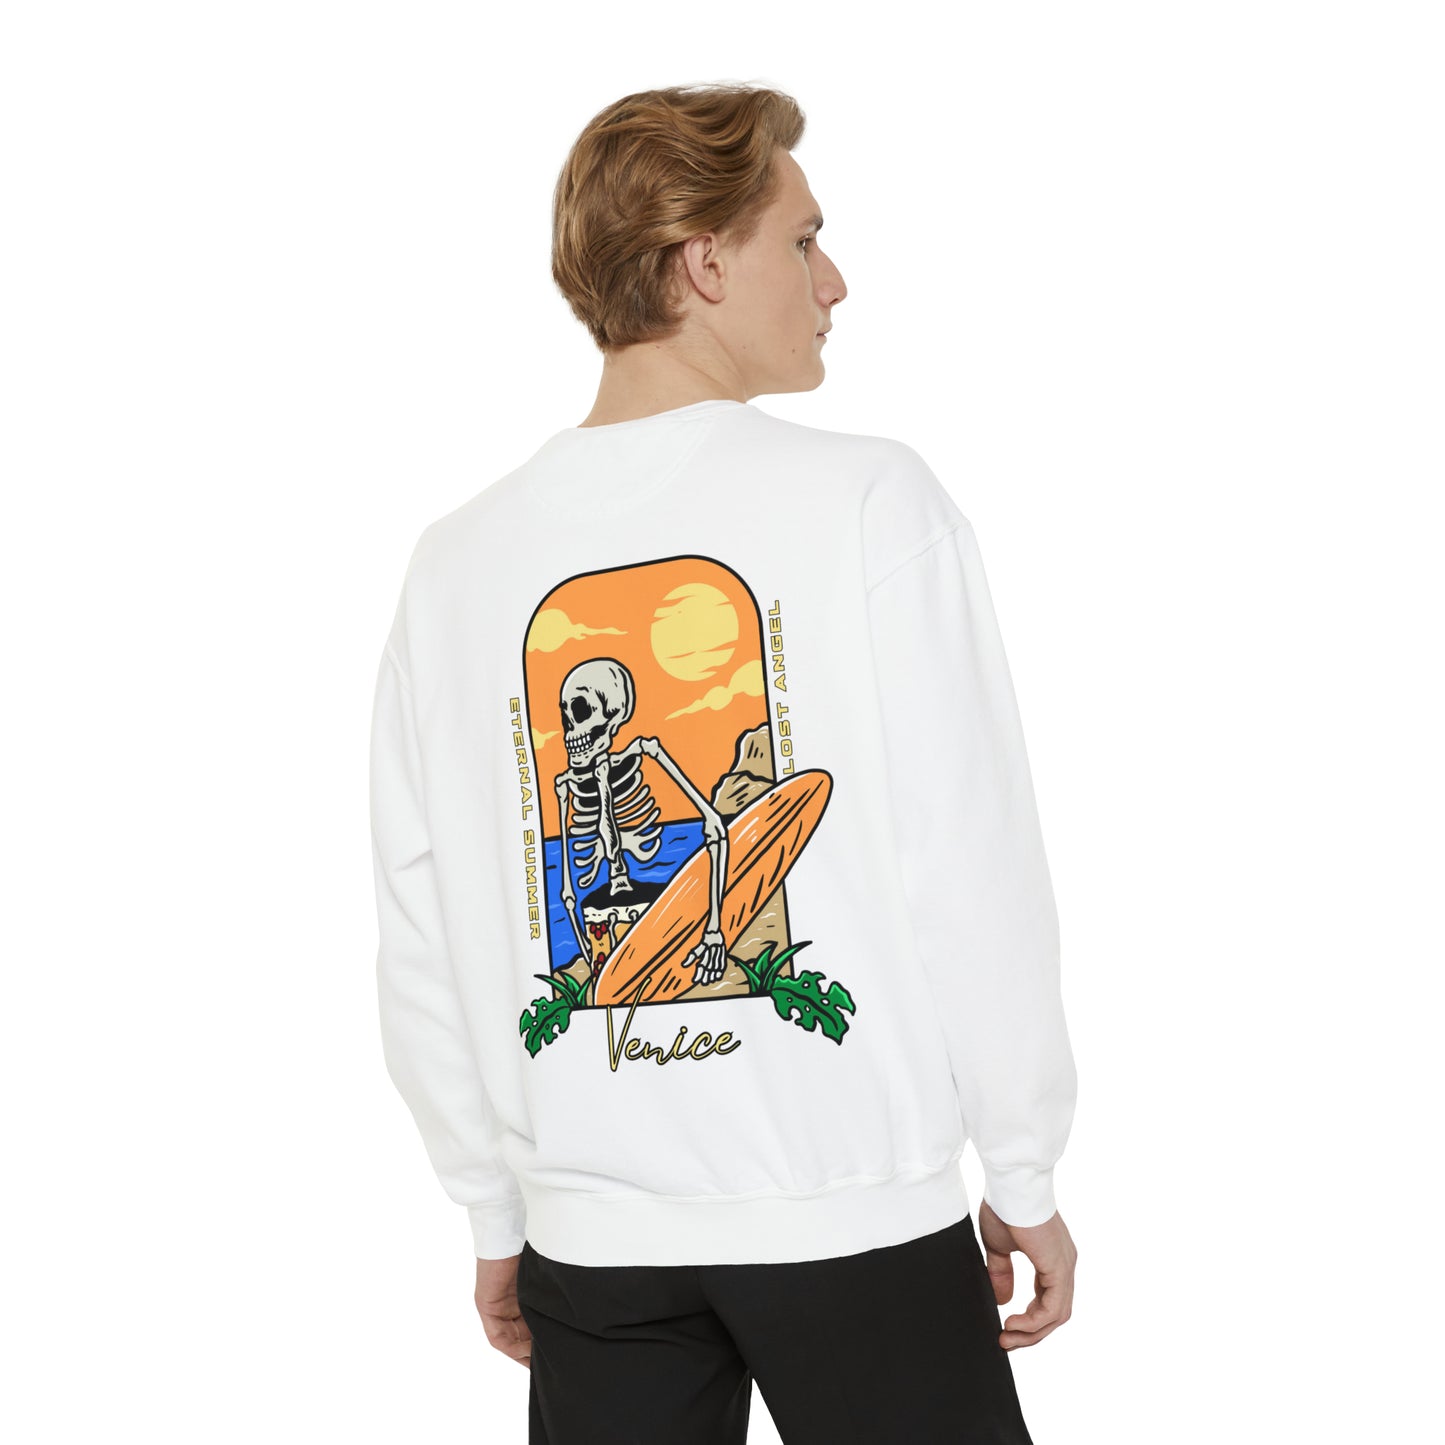 Venice Beach Sweatshirt